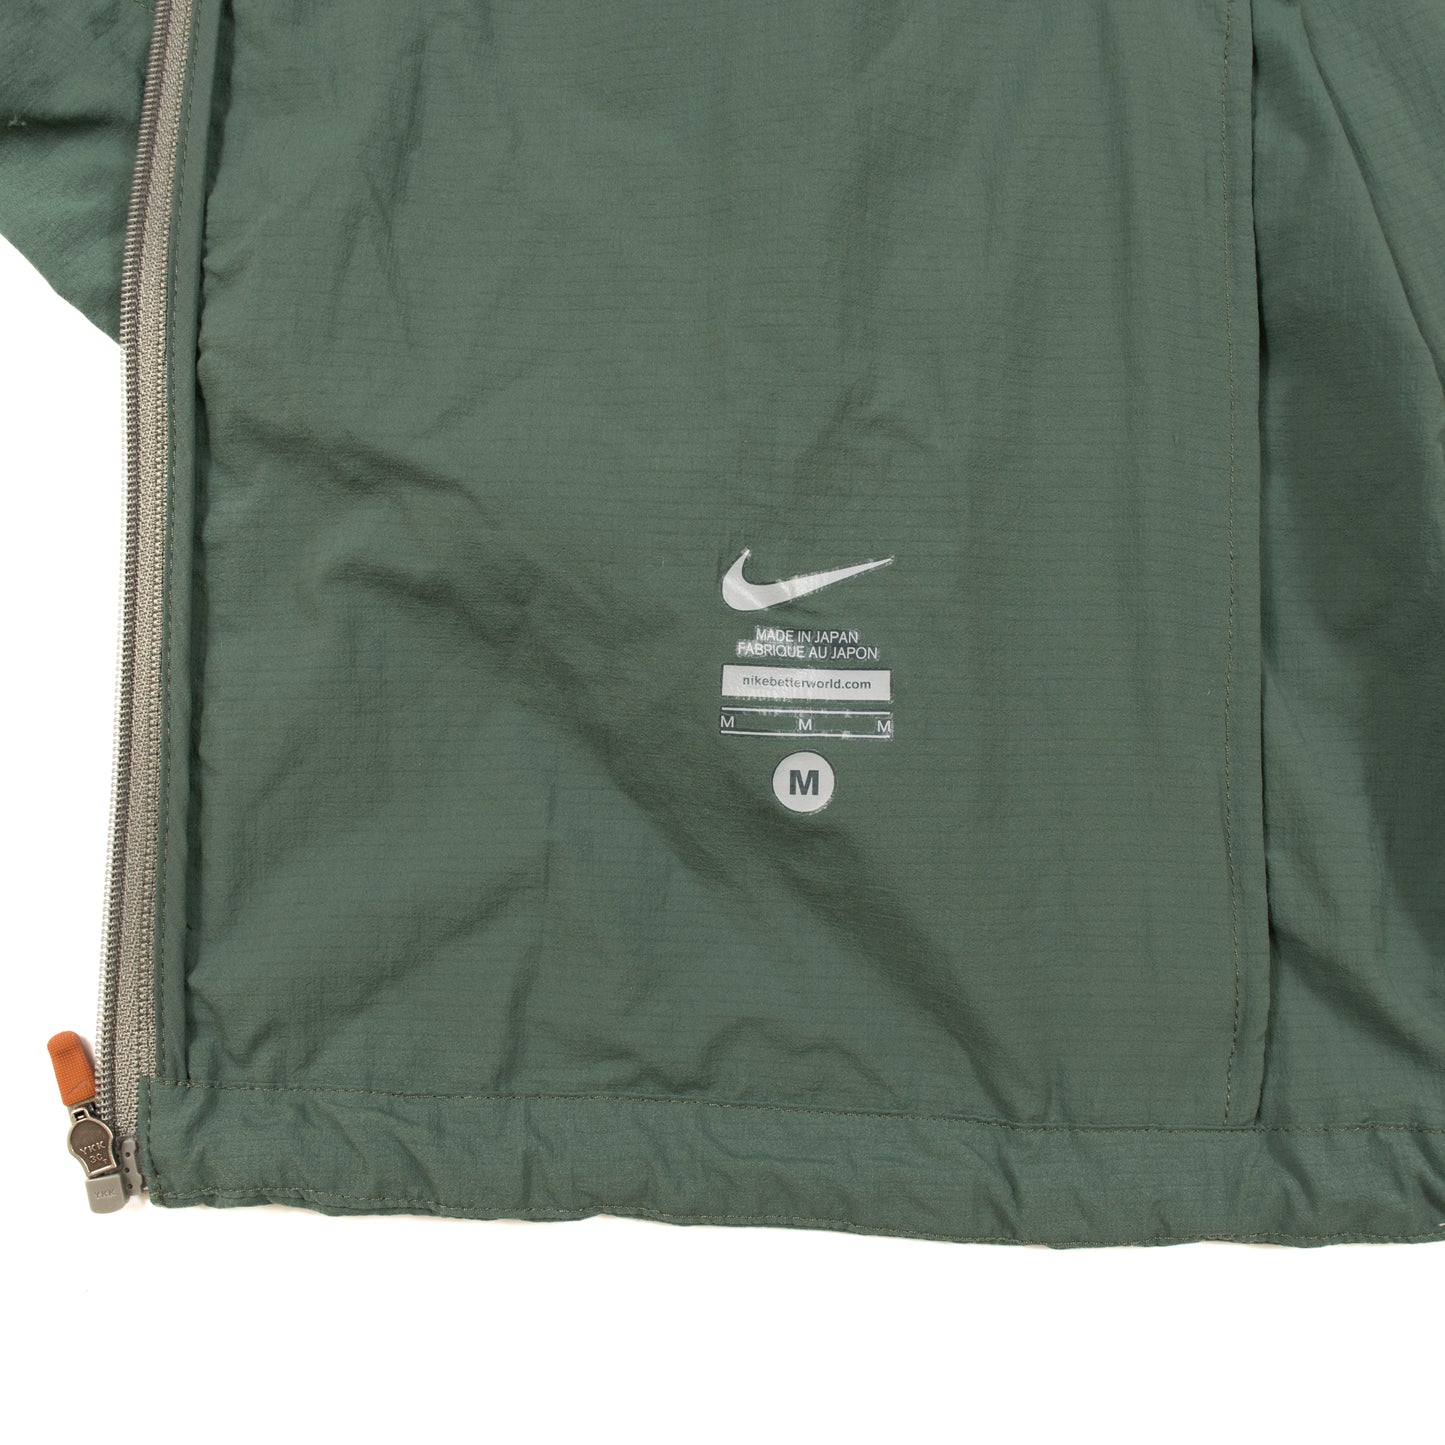 Undercover x Nike Gyakusou Packable Light Running Jacket